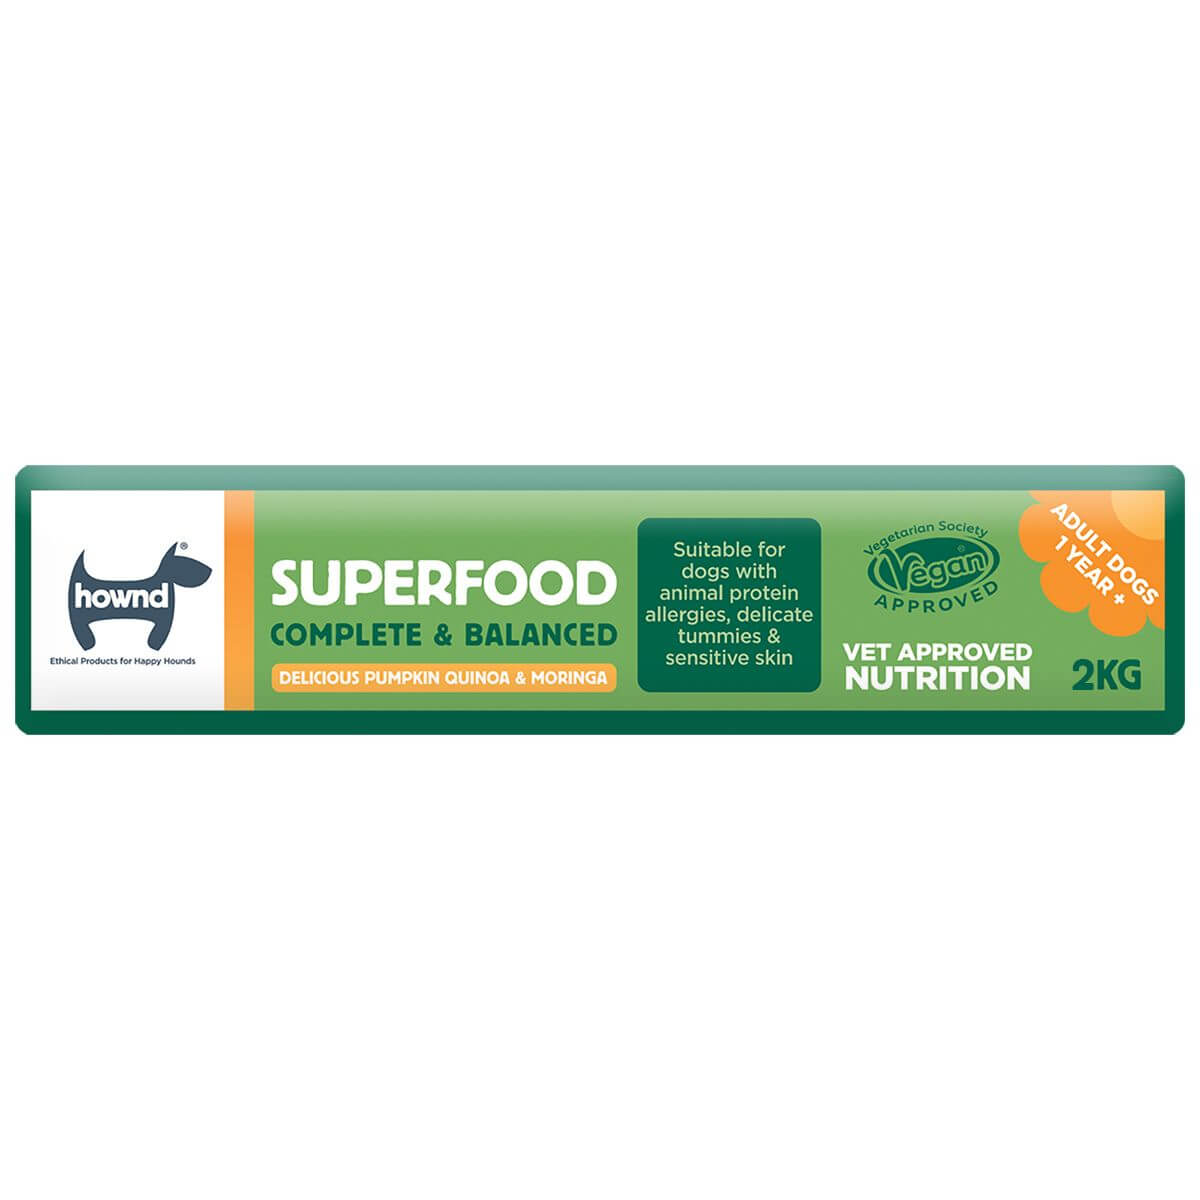 Delicious Pumpkin Quinoa Moringa Hypoallergenic Dry Dog Food - 2kg bottom